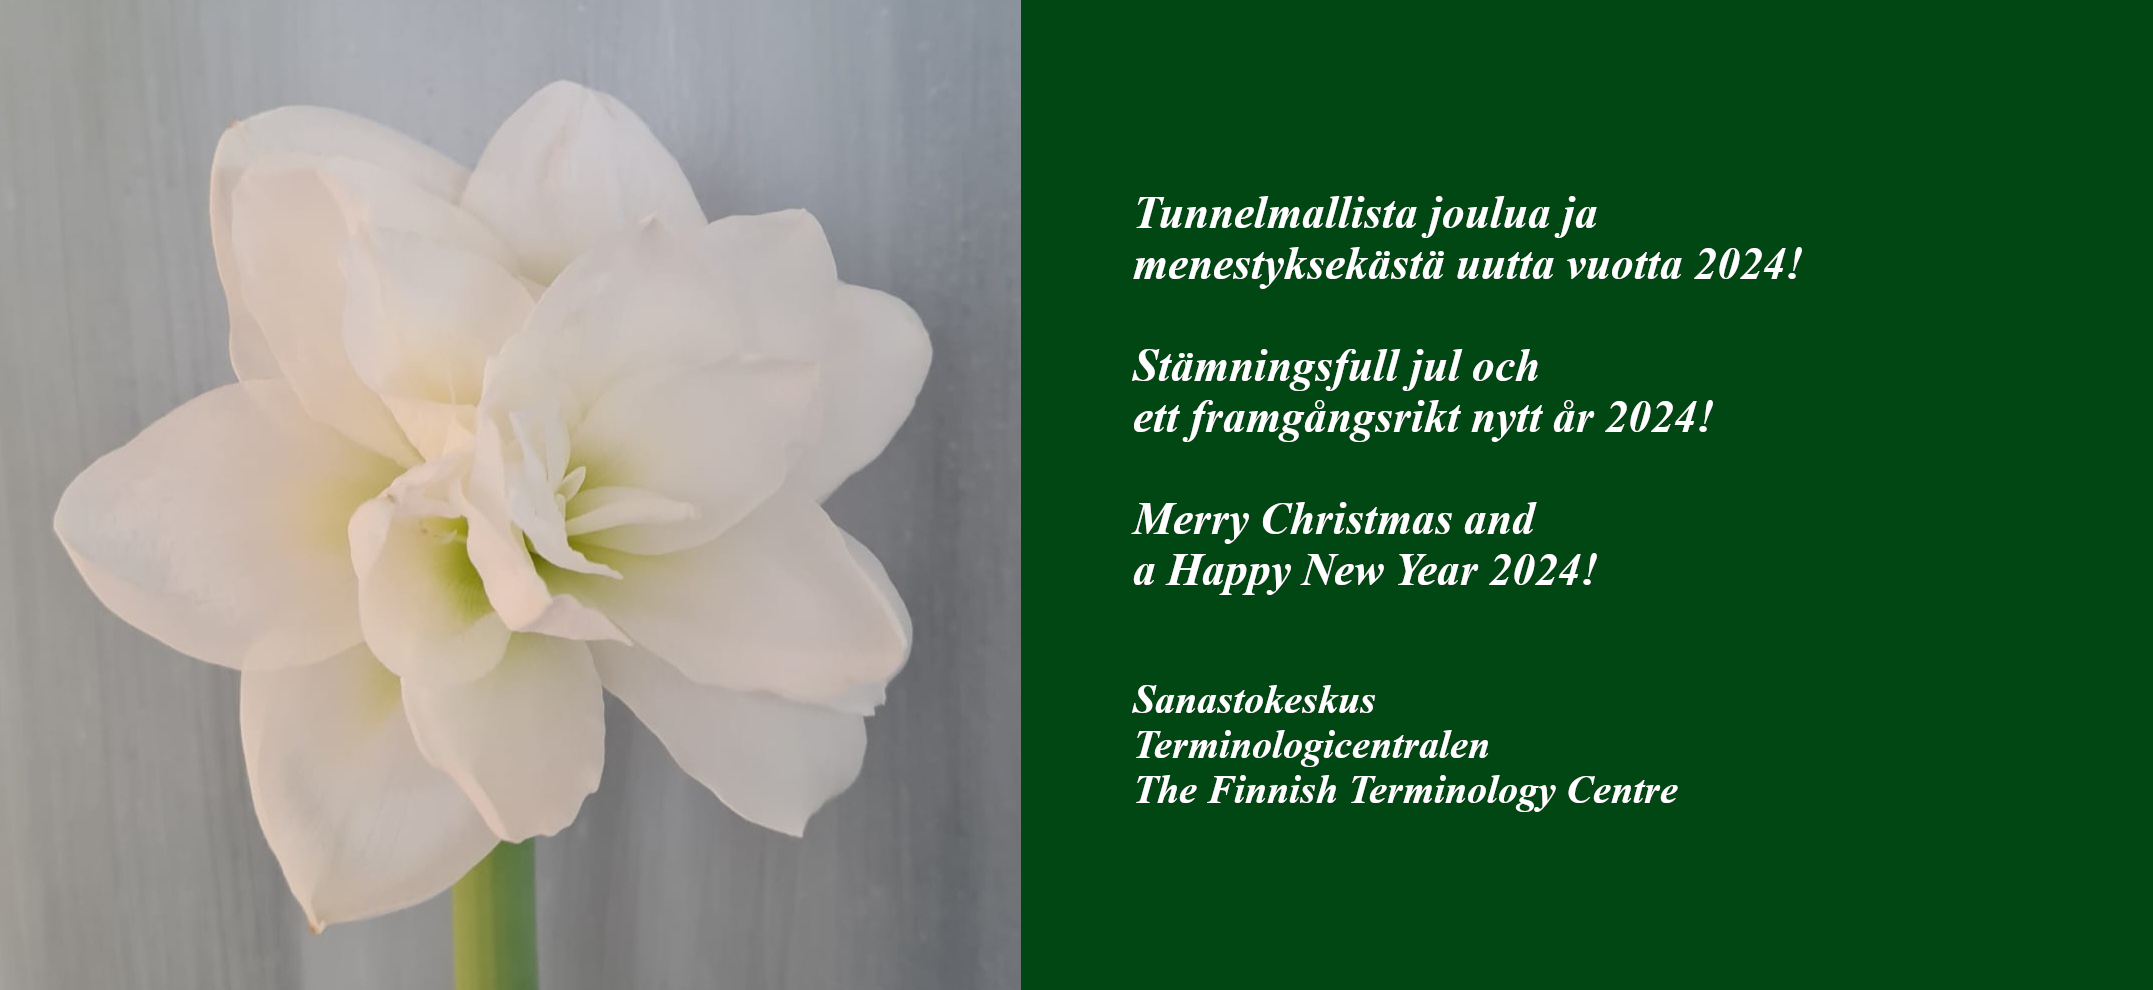 Christmas greeting picturing a large white amaryllis